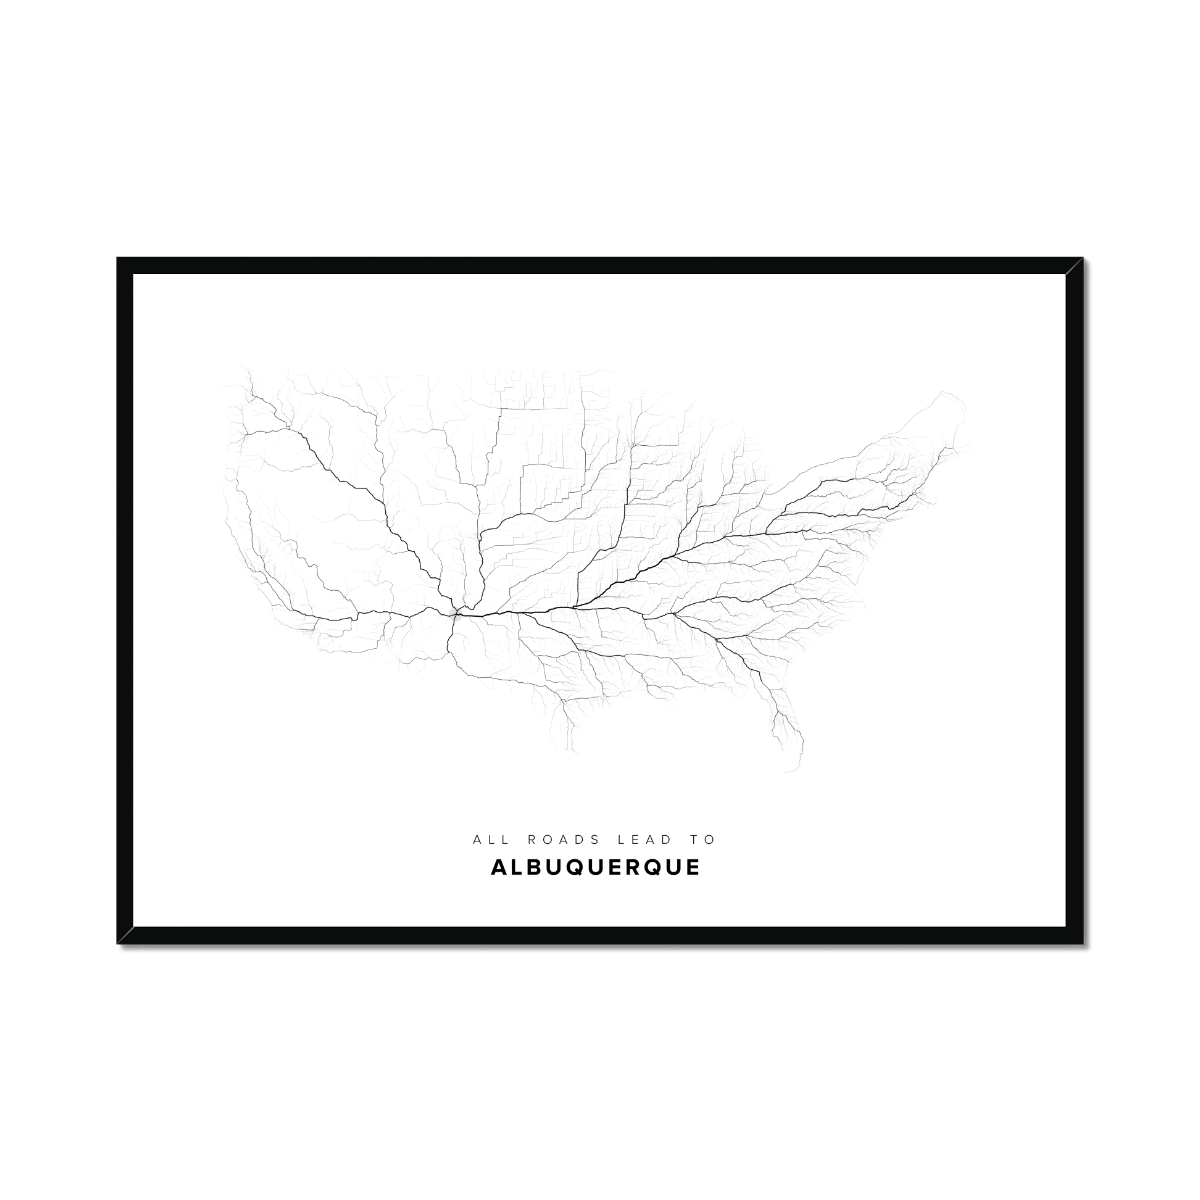 All roads lead to Albuquerque (United States of America) Fine Art Map Print